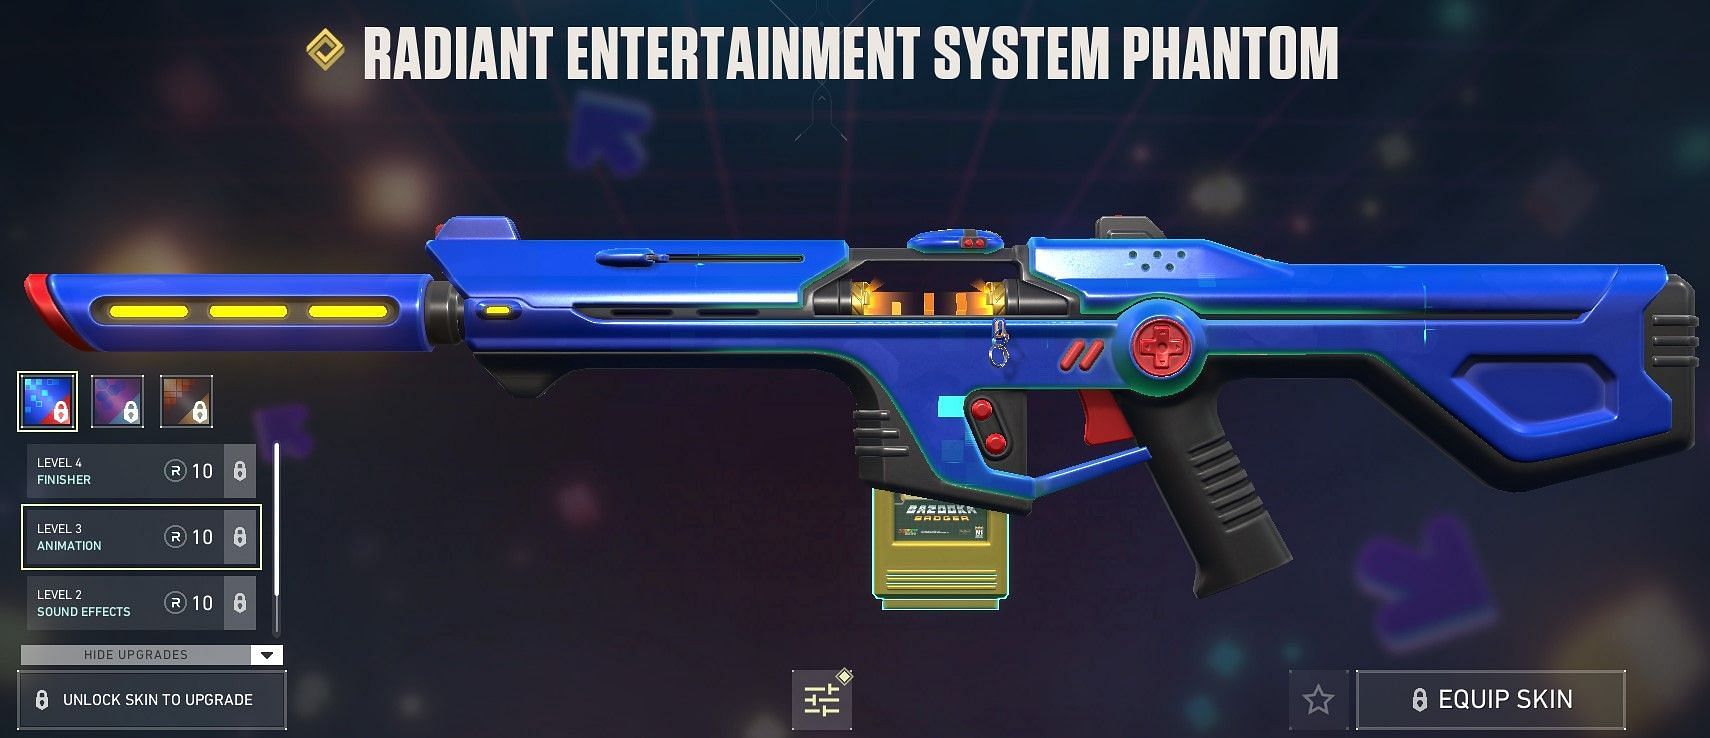 Radiant Entertainment System Phantom (Image via Riot Games)